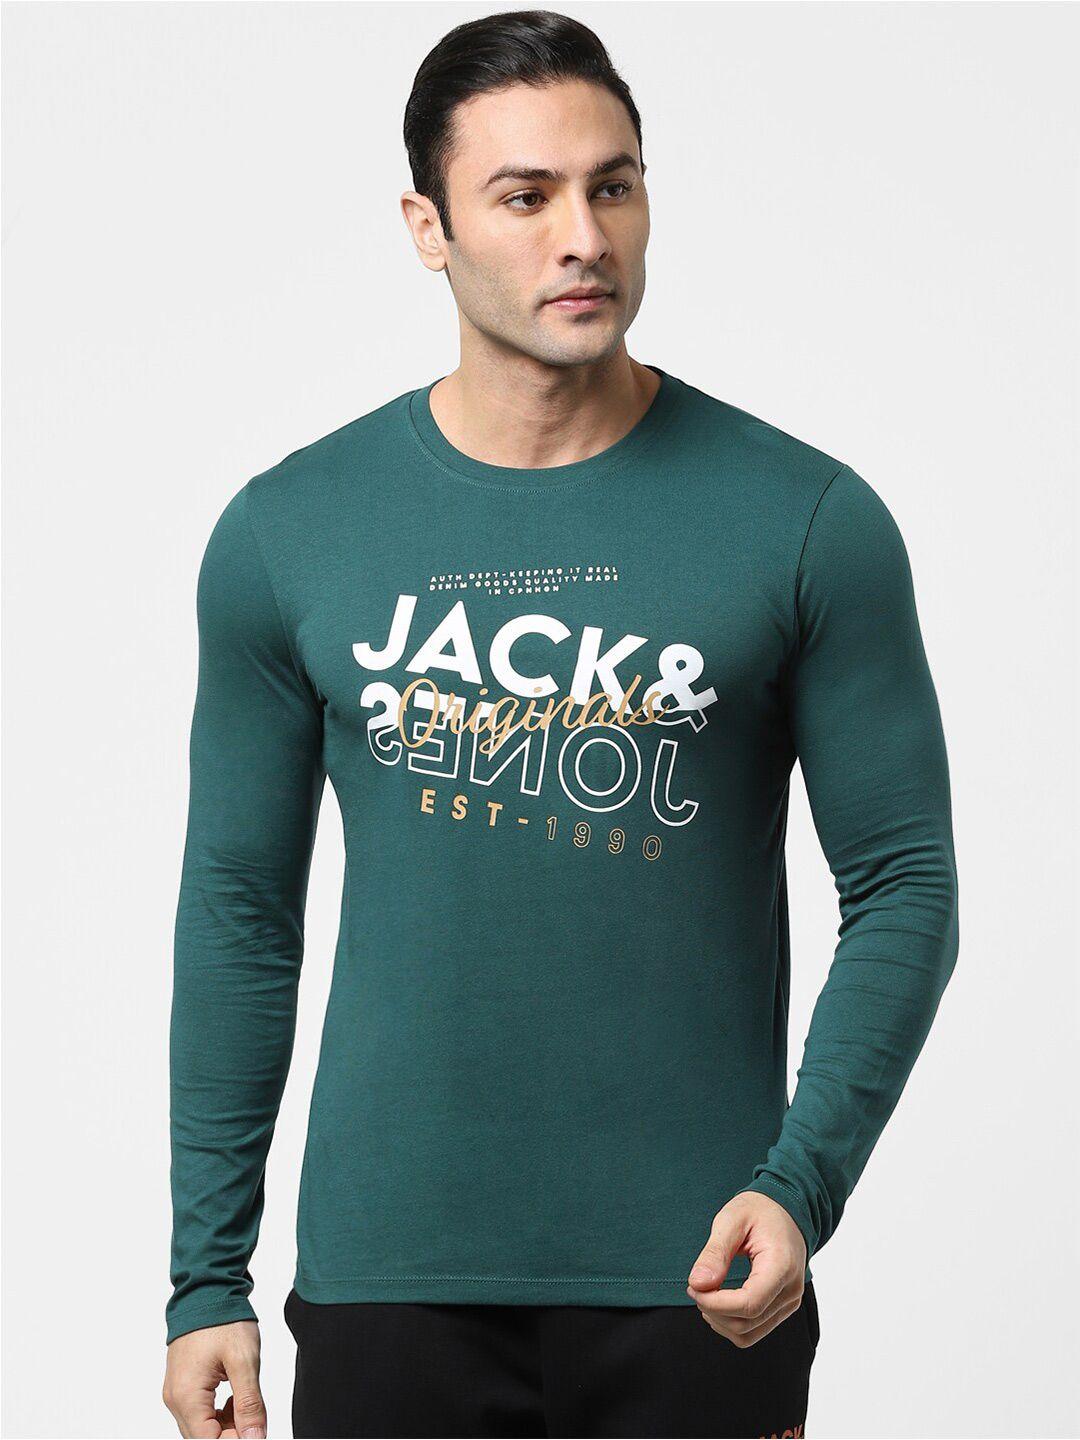 jack & jones men green & white typography printed t-shirt